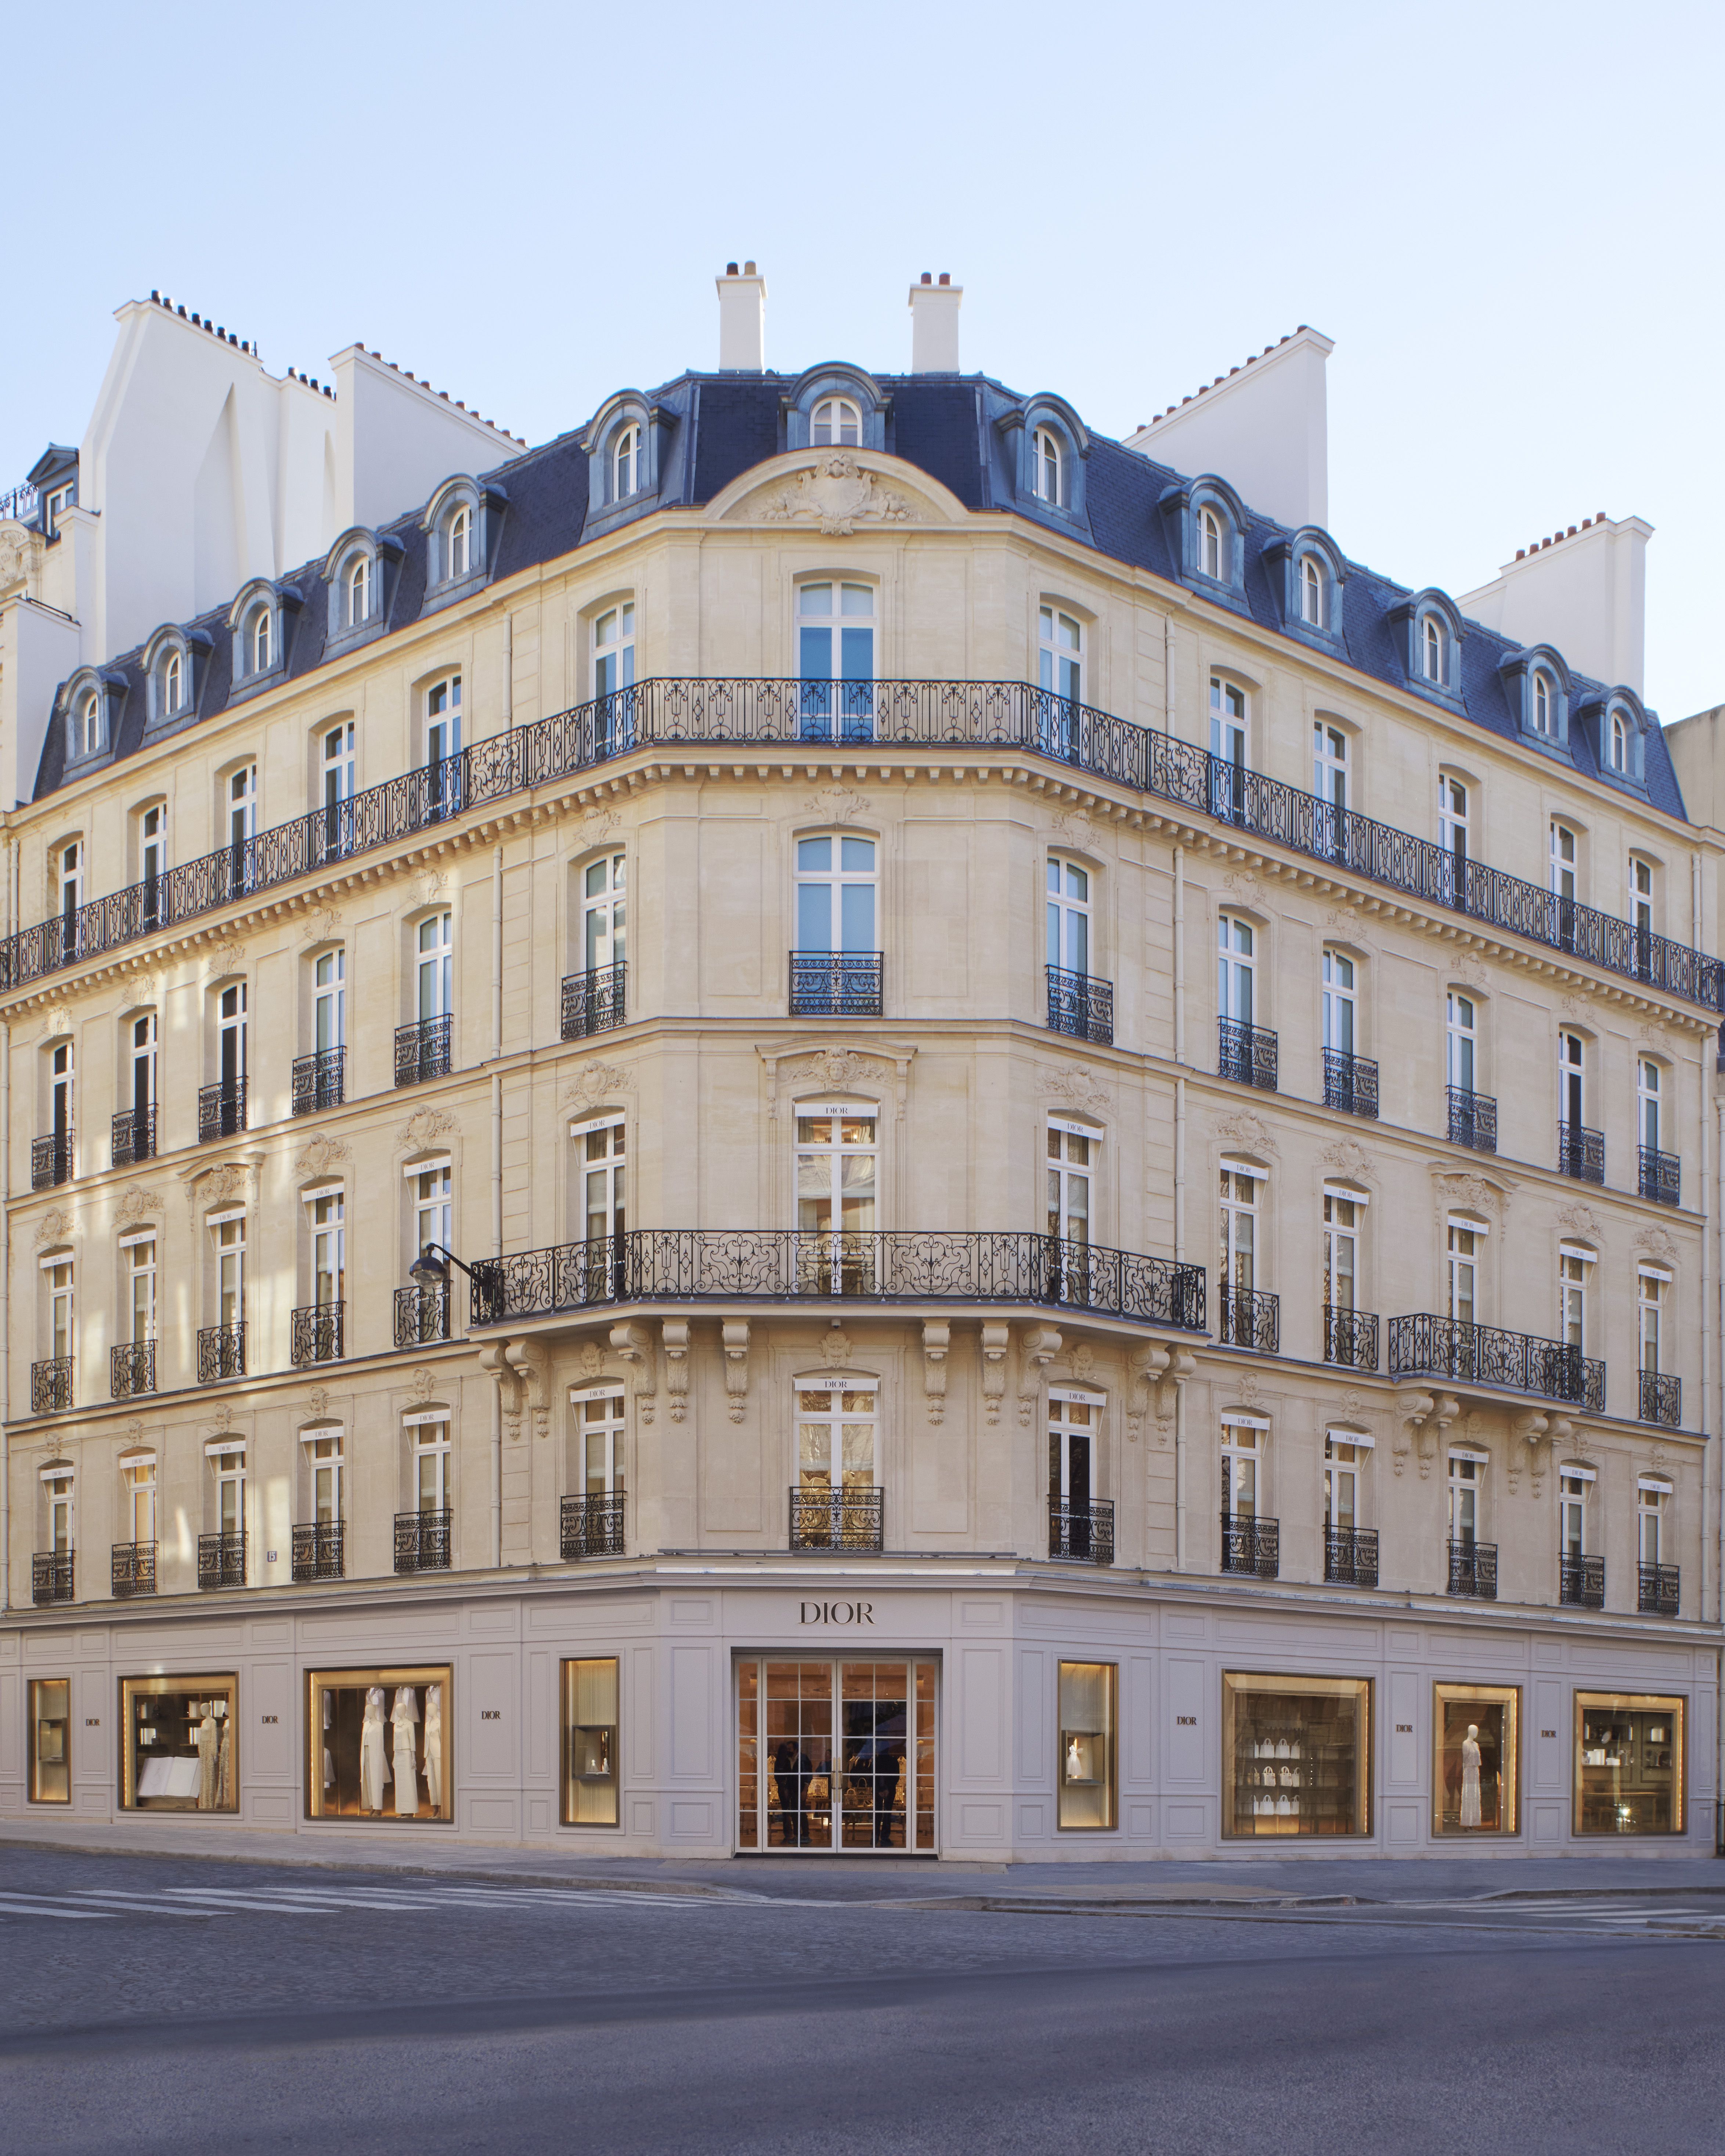 The store of the fashion company Christian Dior in Avenue